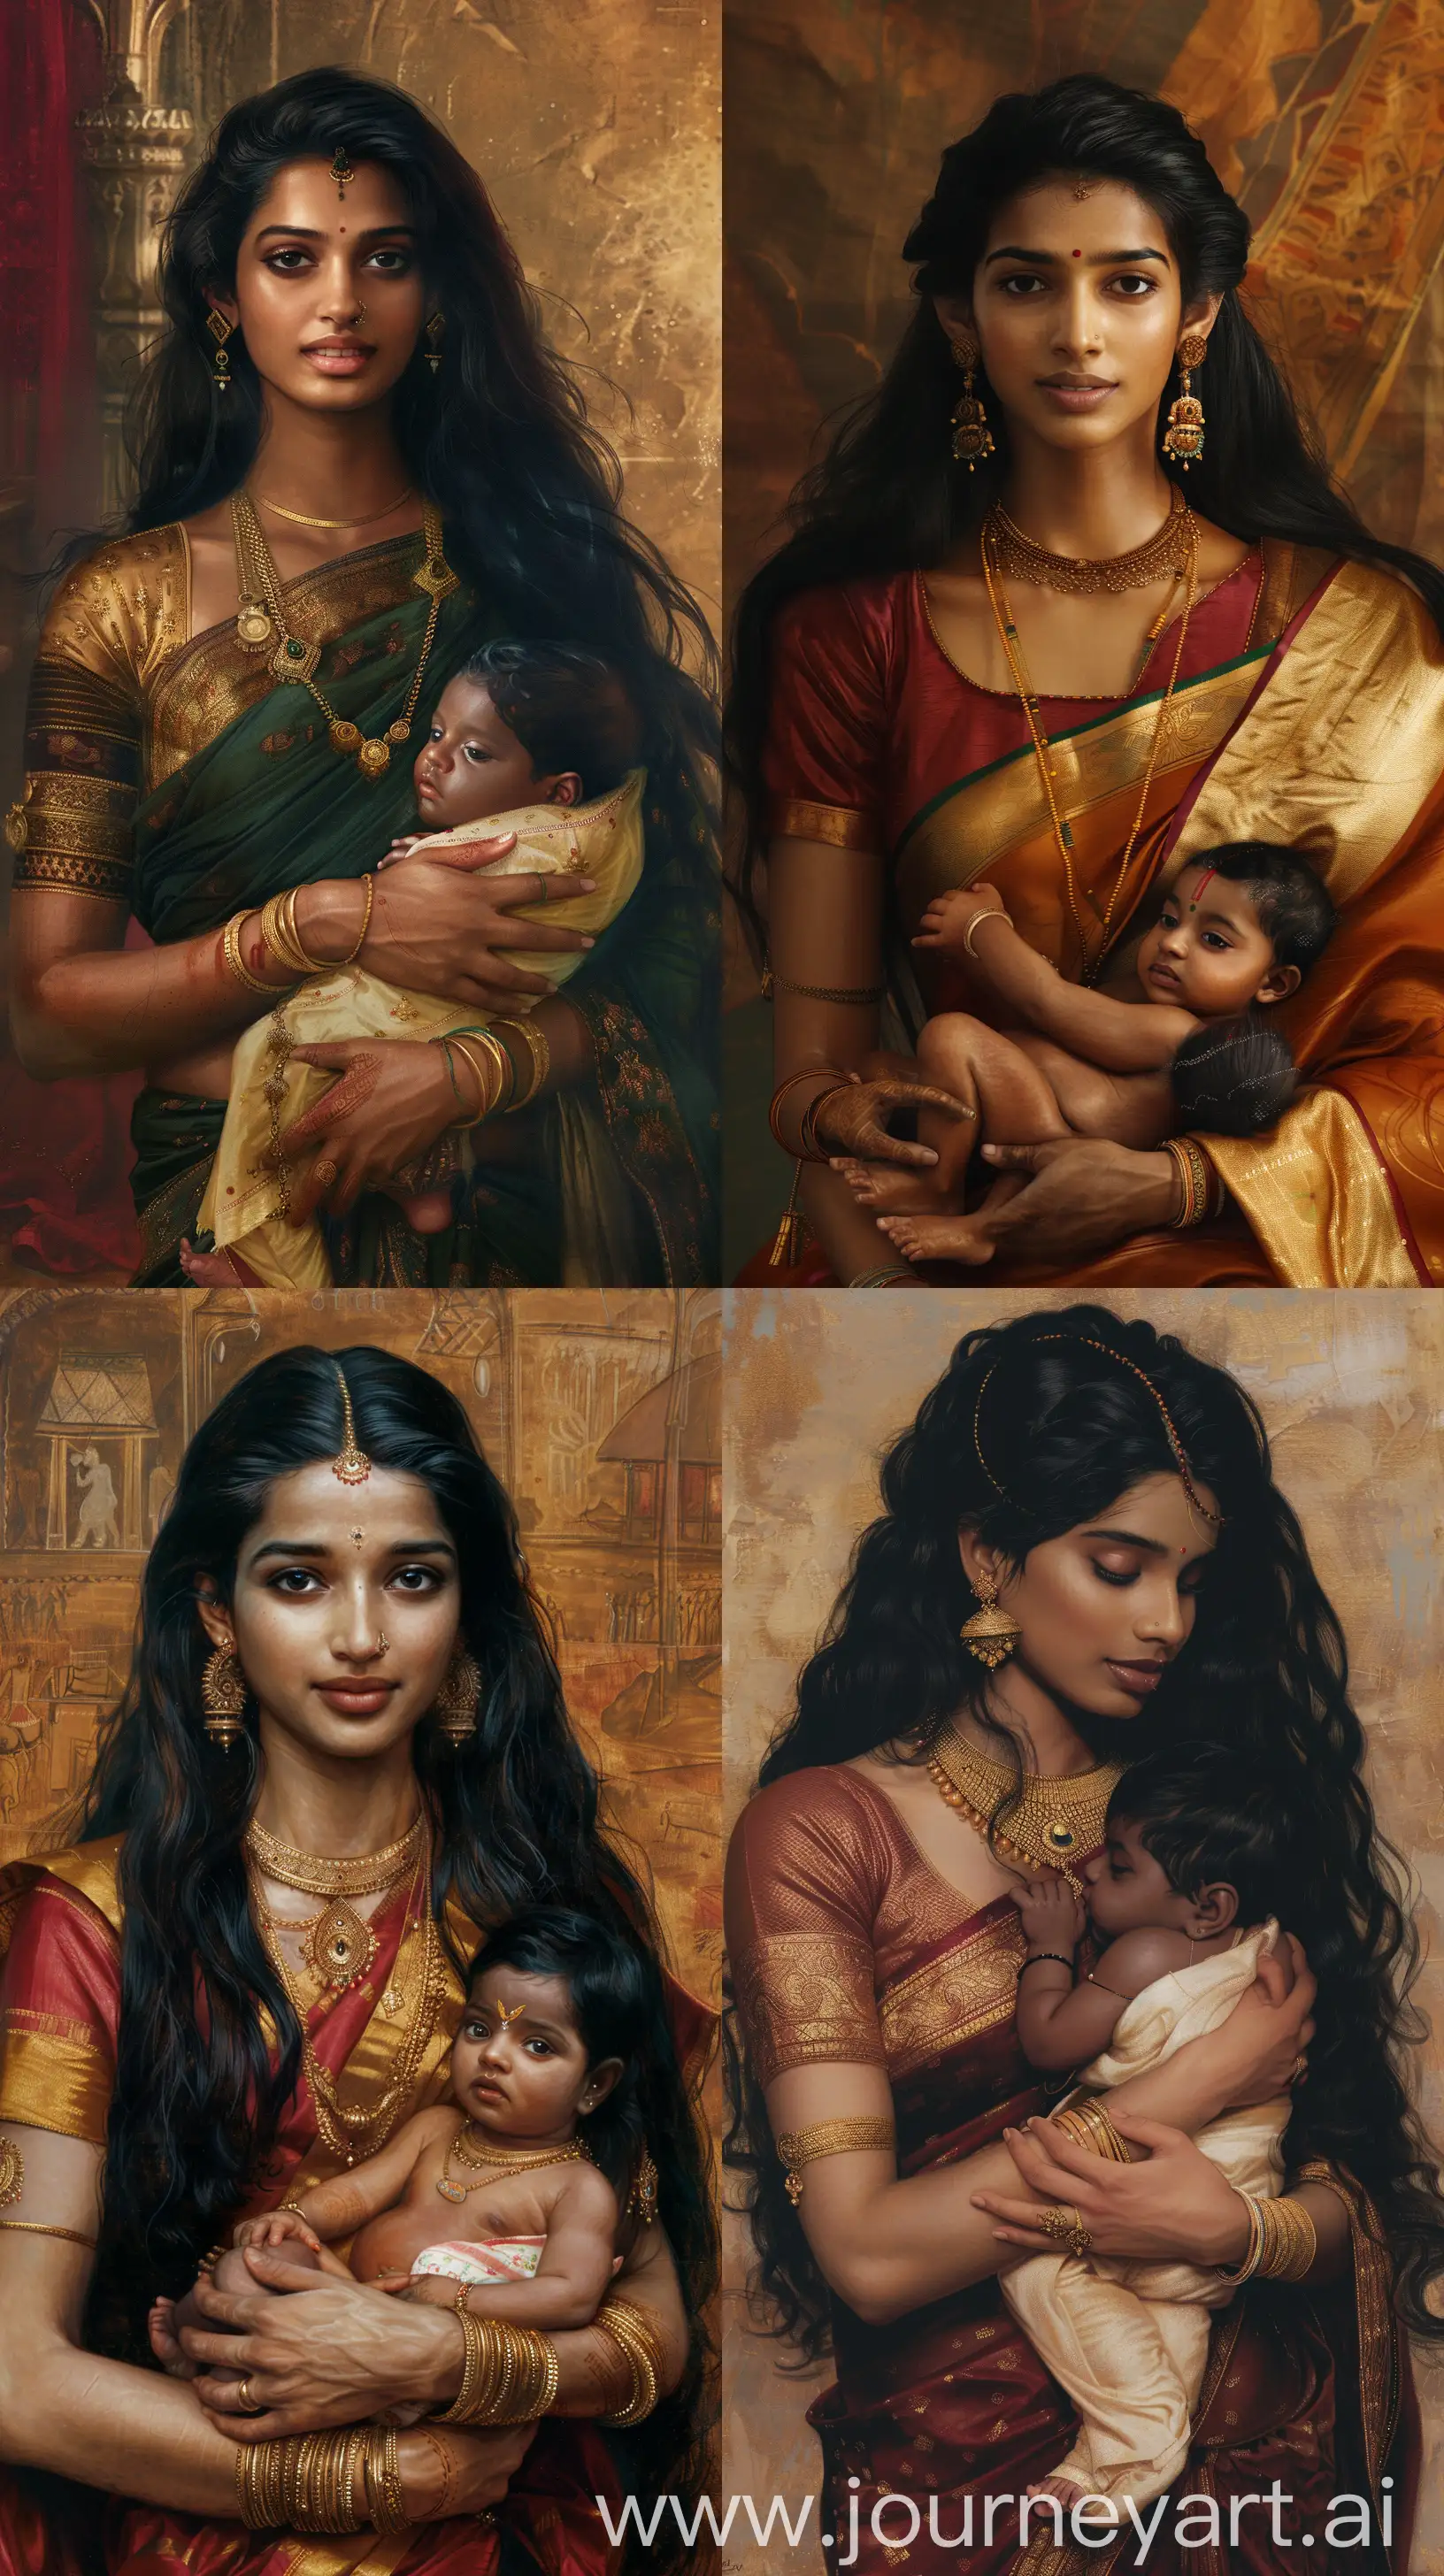 Ancient-Indian-Woman-Holding-Newborn-Baby-in-Raj-Ravi-Varma-Art-Style